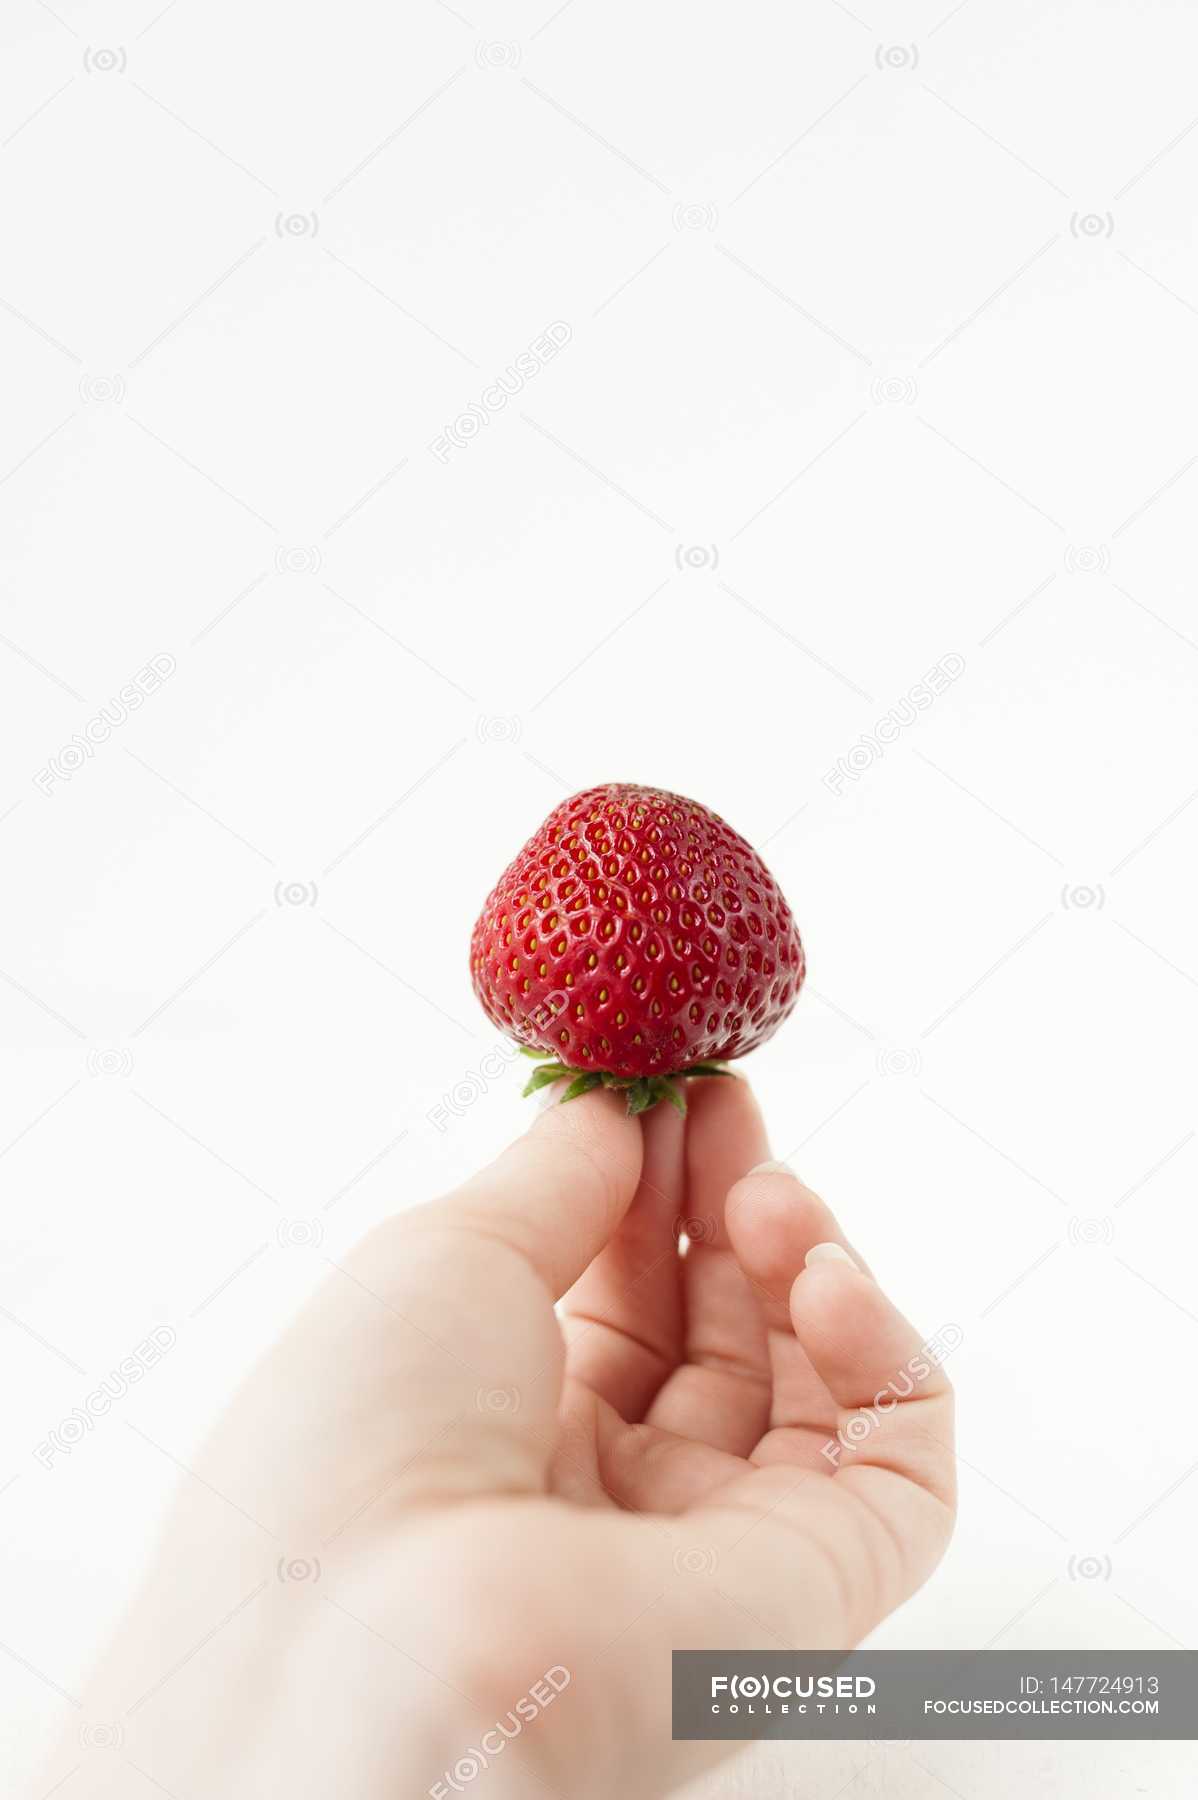 Hand Holding Strawberry — Stock Photo | #147724913